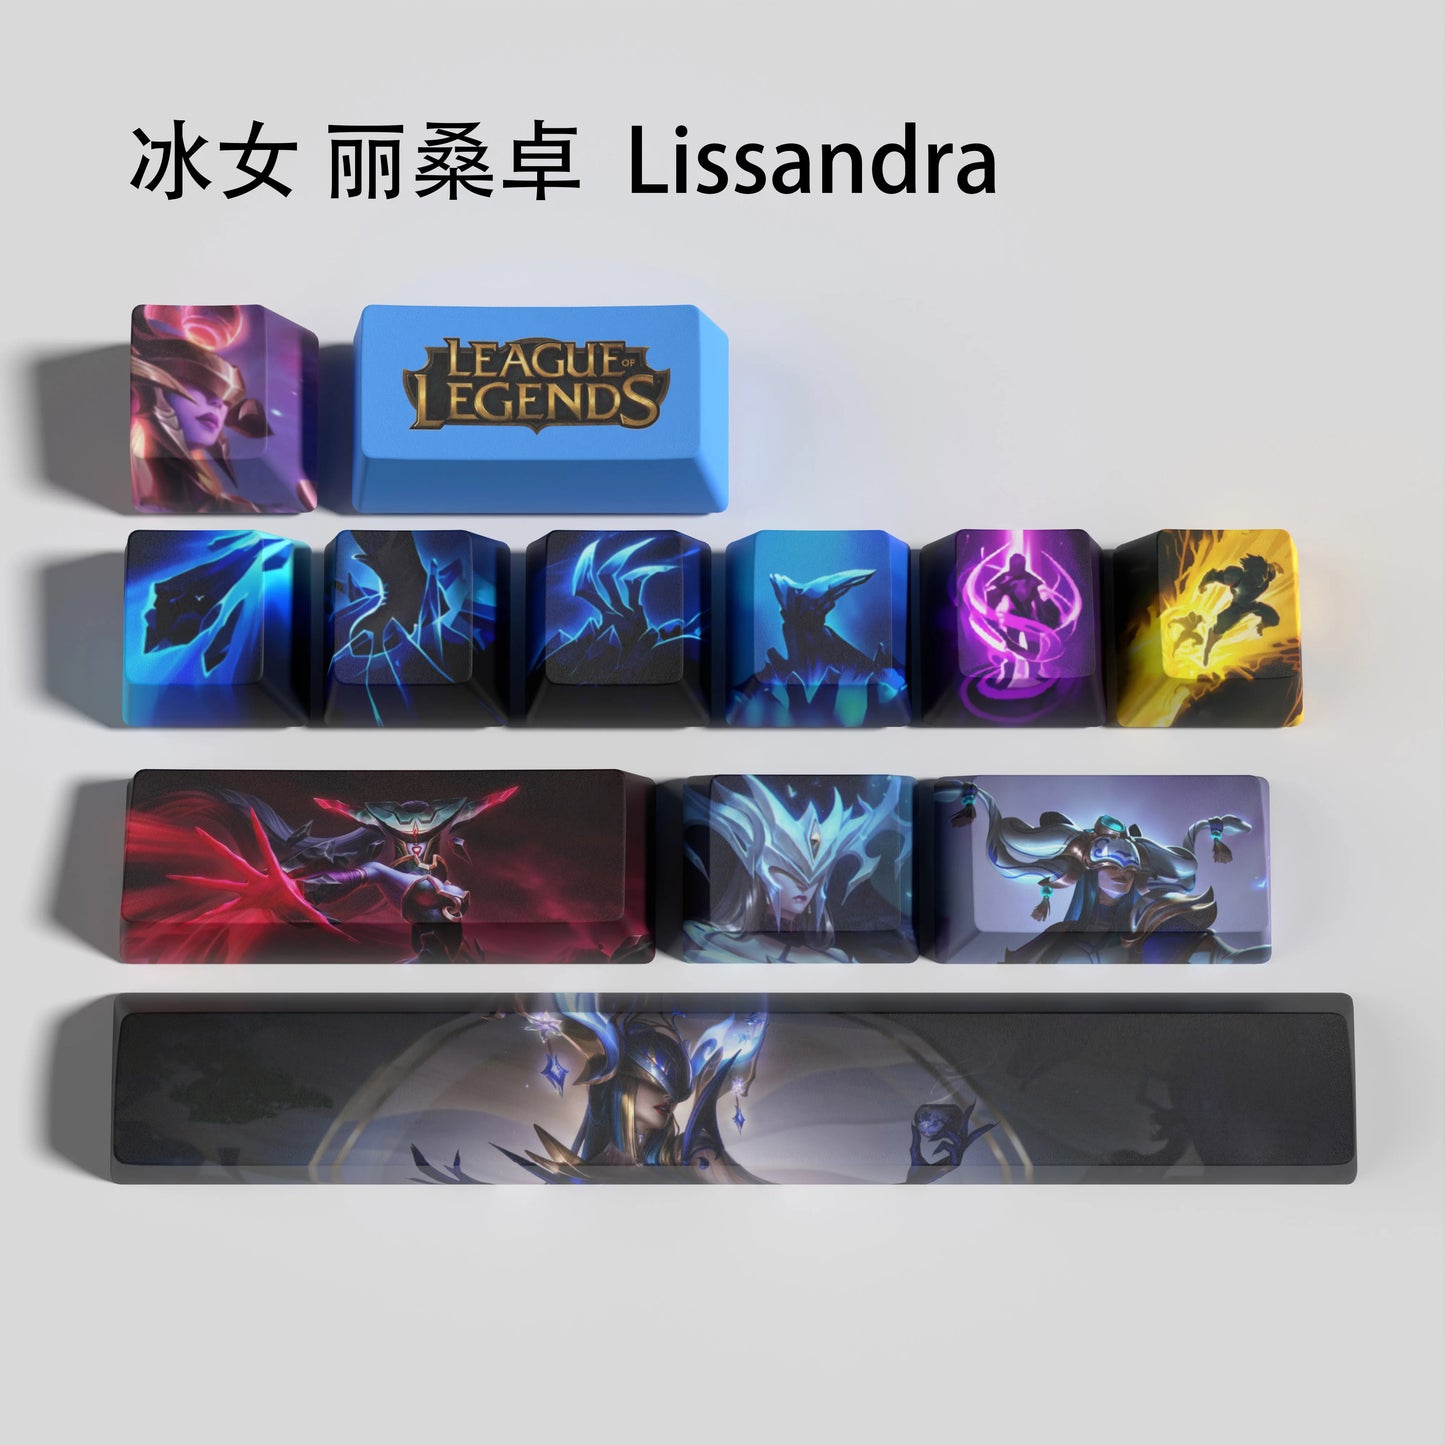 Lissandra keycaps